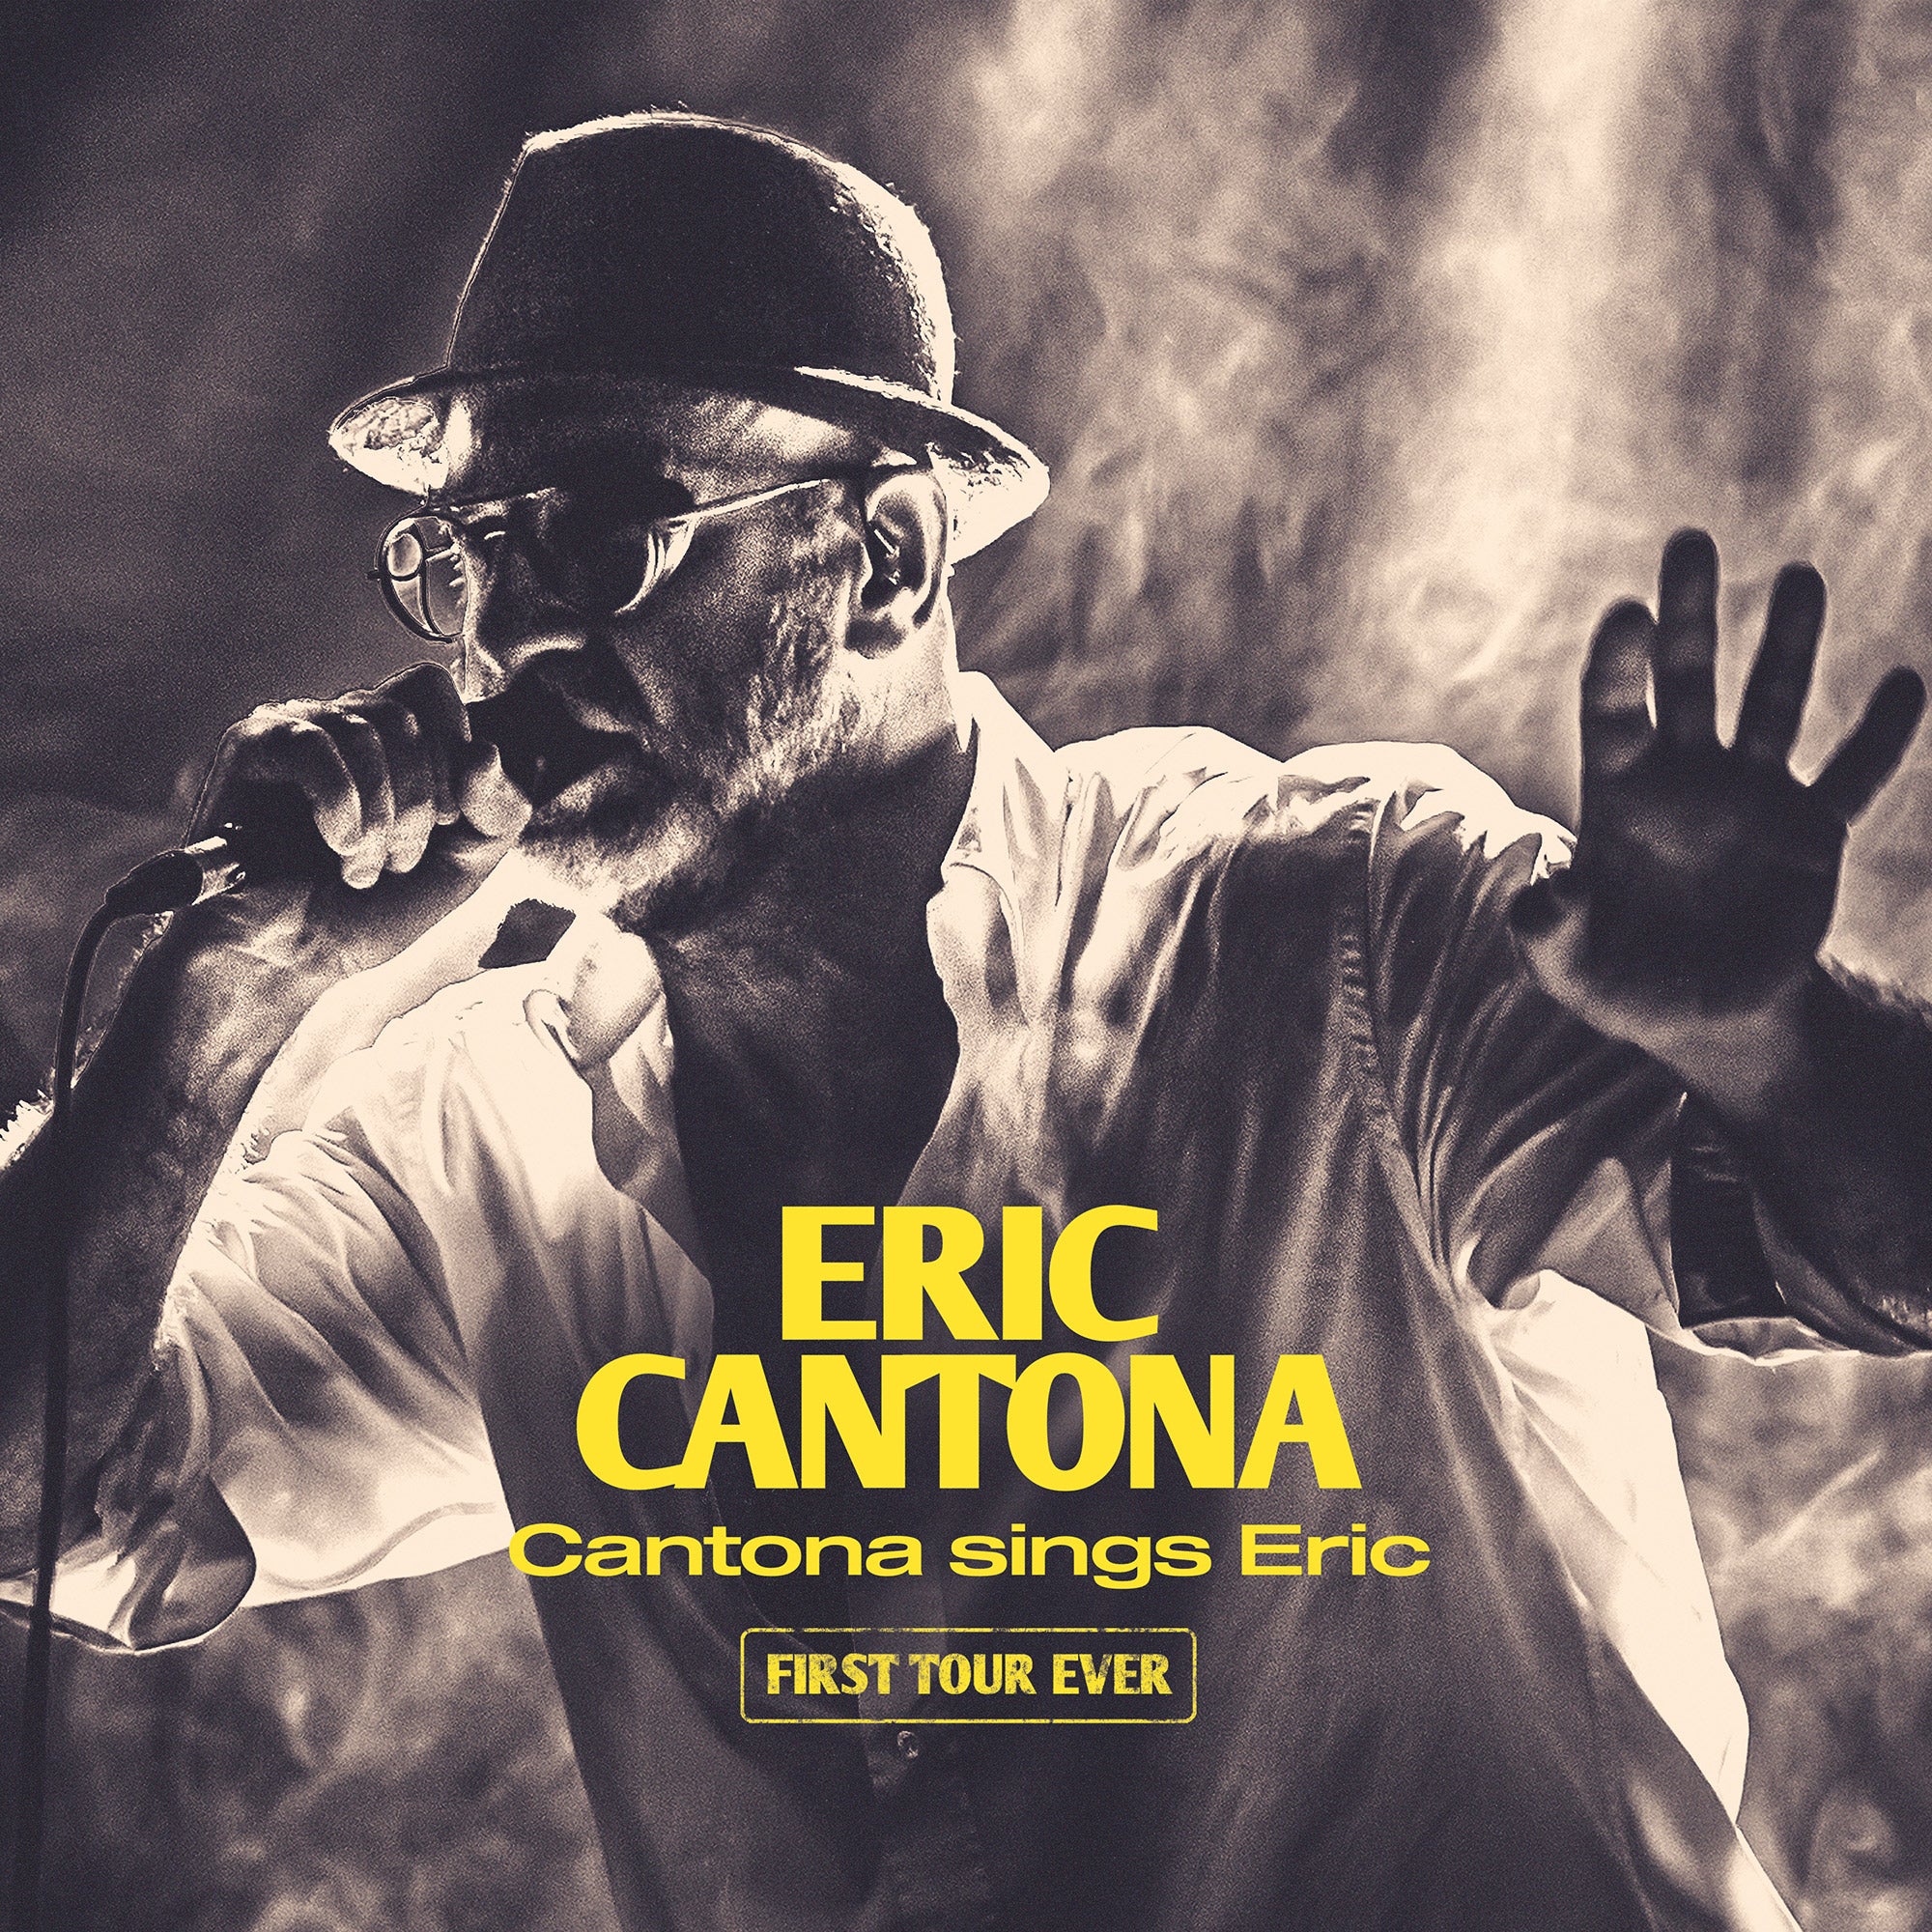 Eric Cantona - Cantona sings Eric - First Tour Ever Vinyl 2LP (Signed)